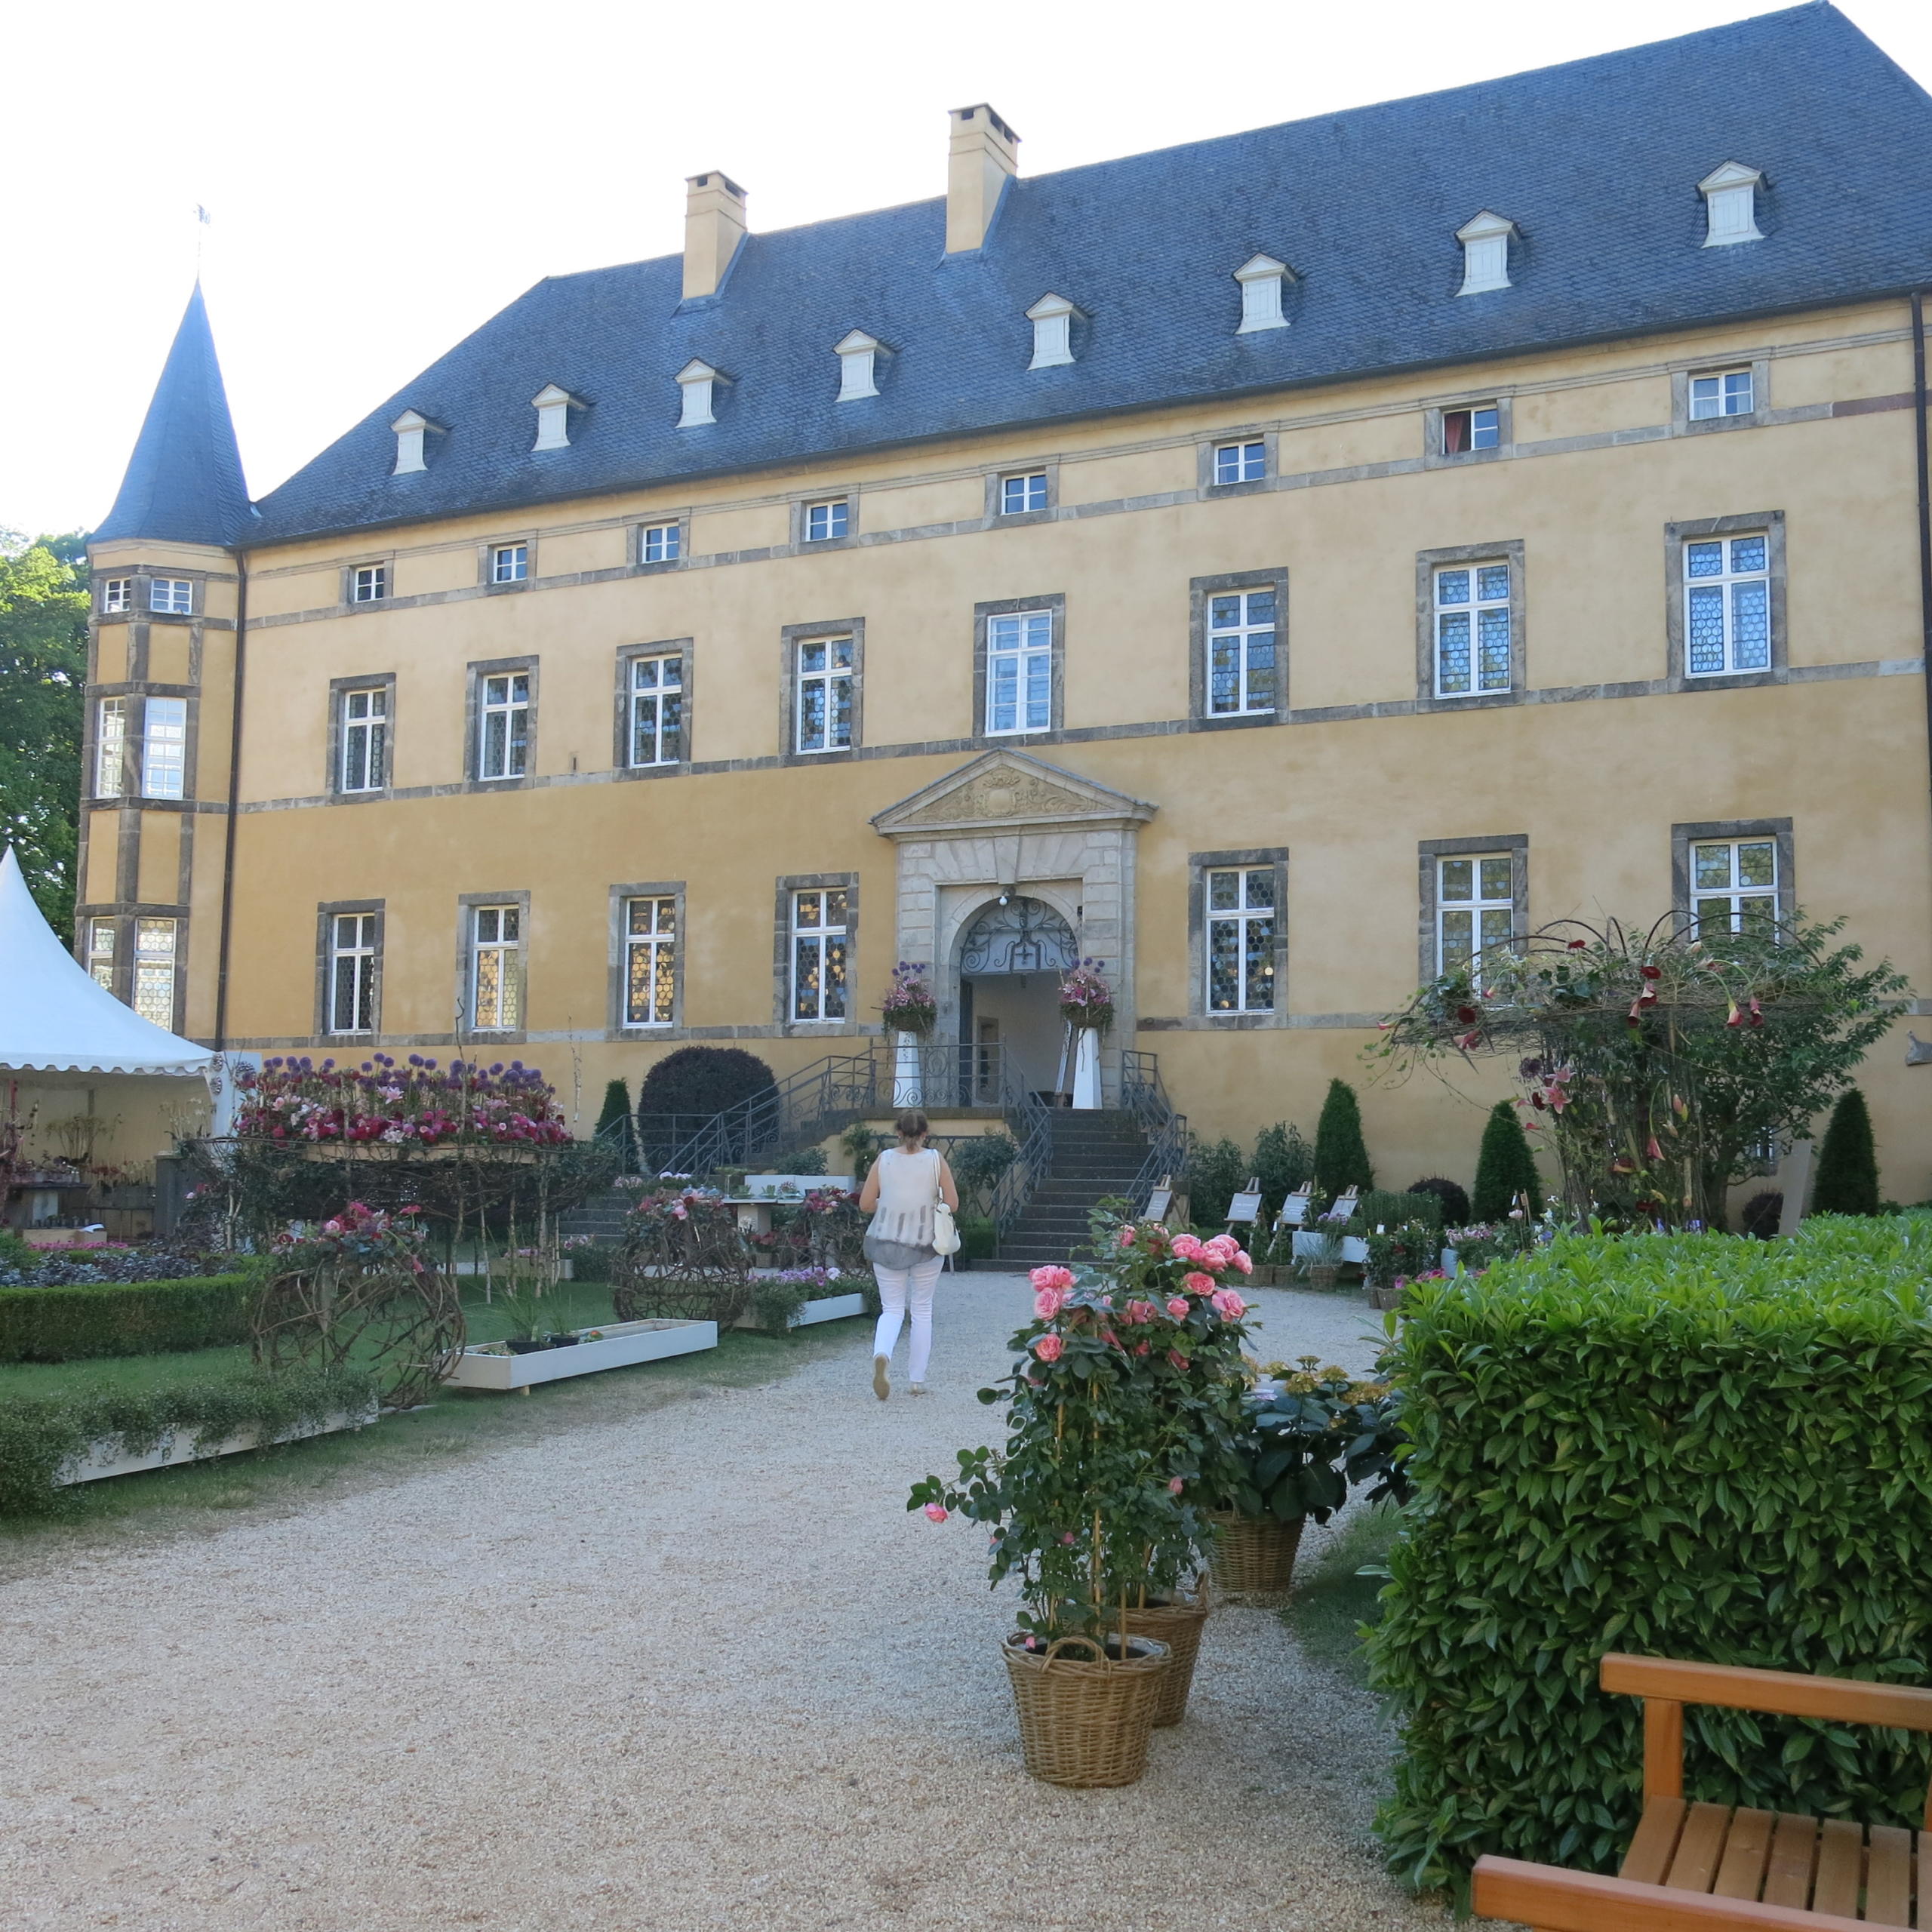 Landpartie Burg Adendorf